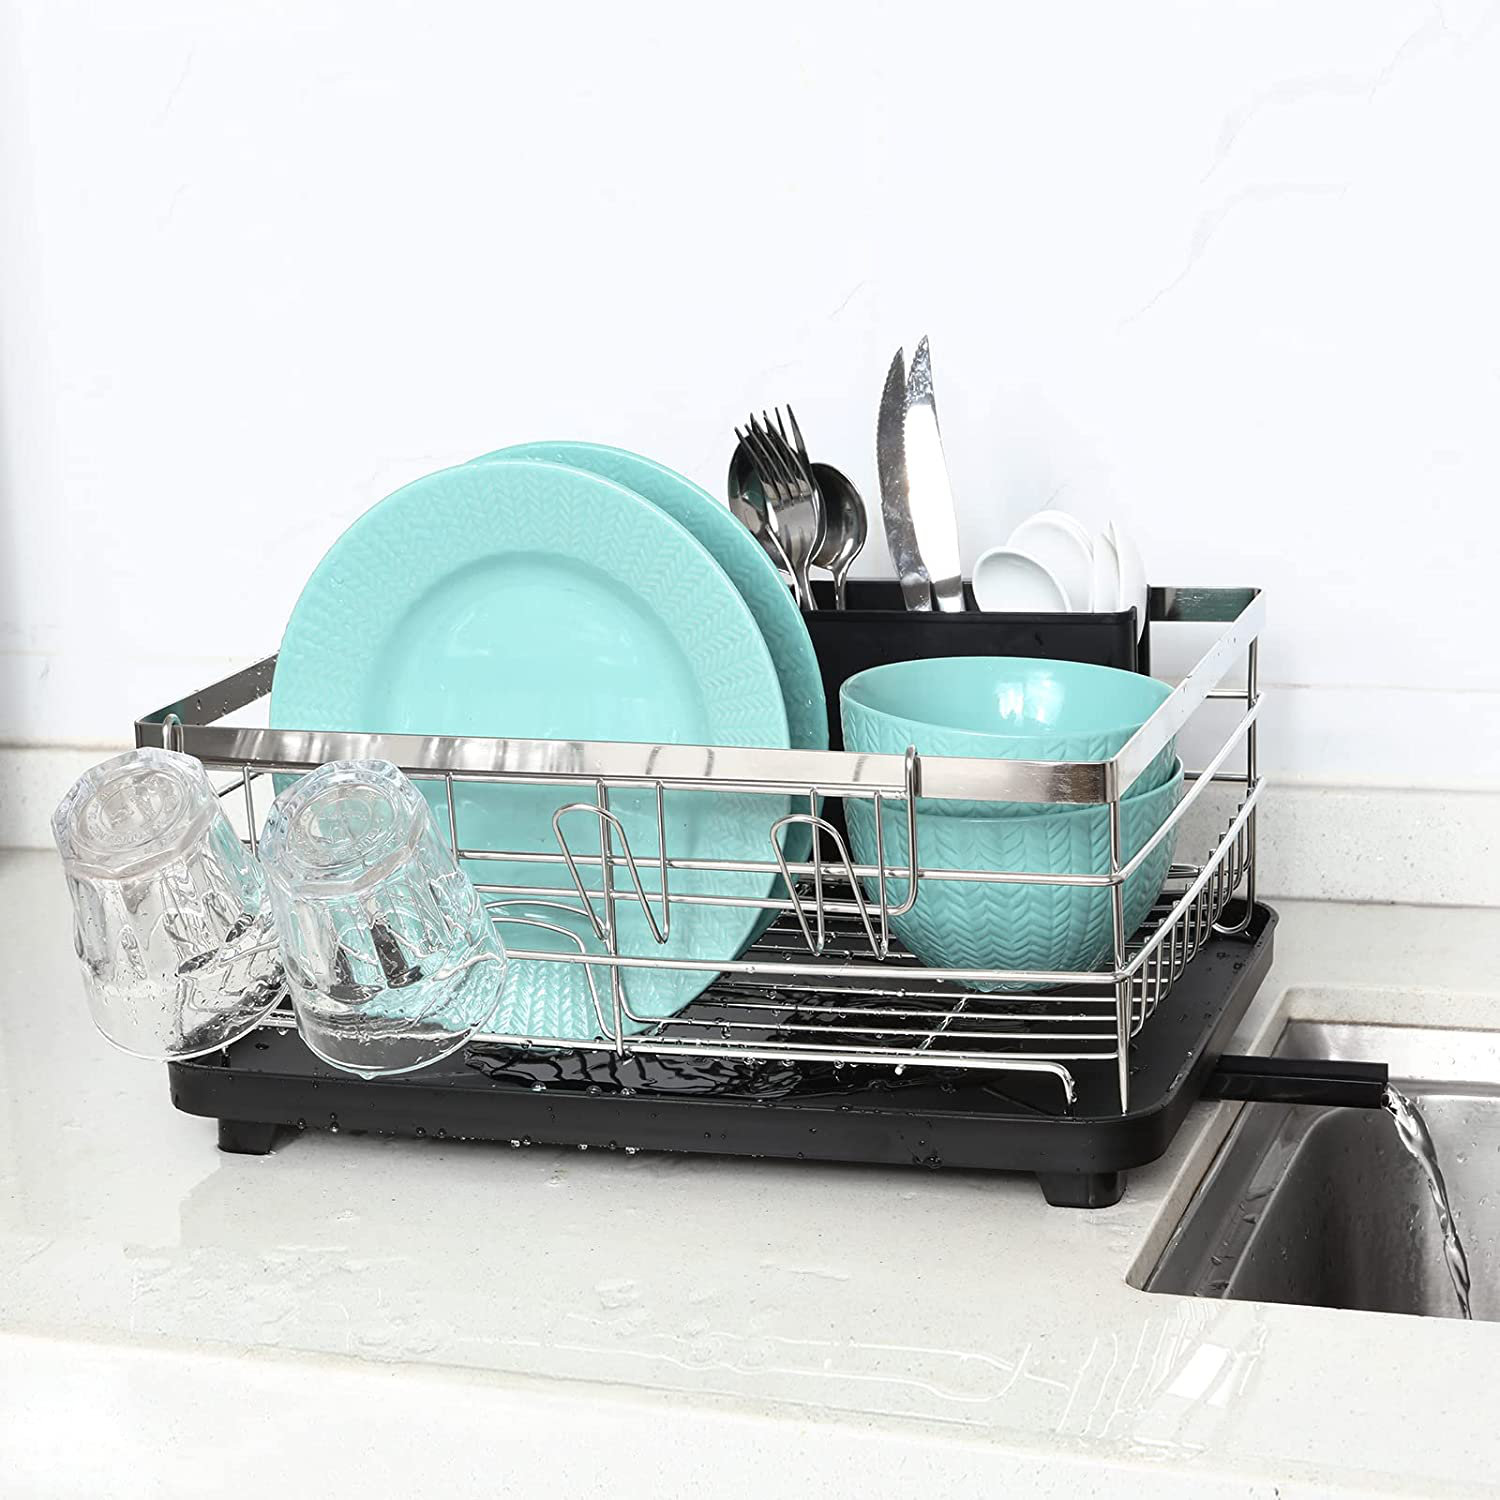 Aluminum Compact Dish Drying Rack with Microfiber Drying Mat